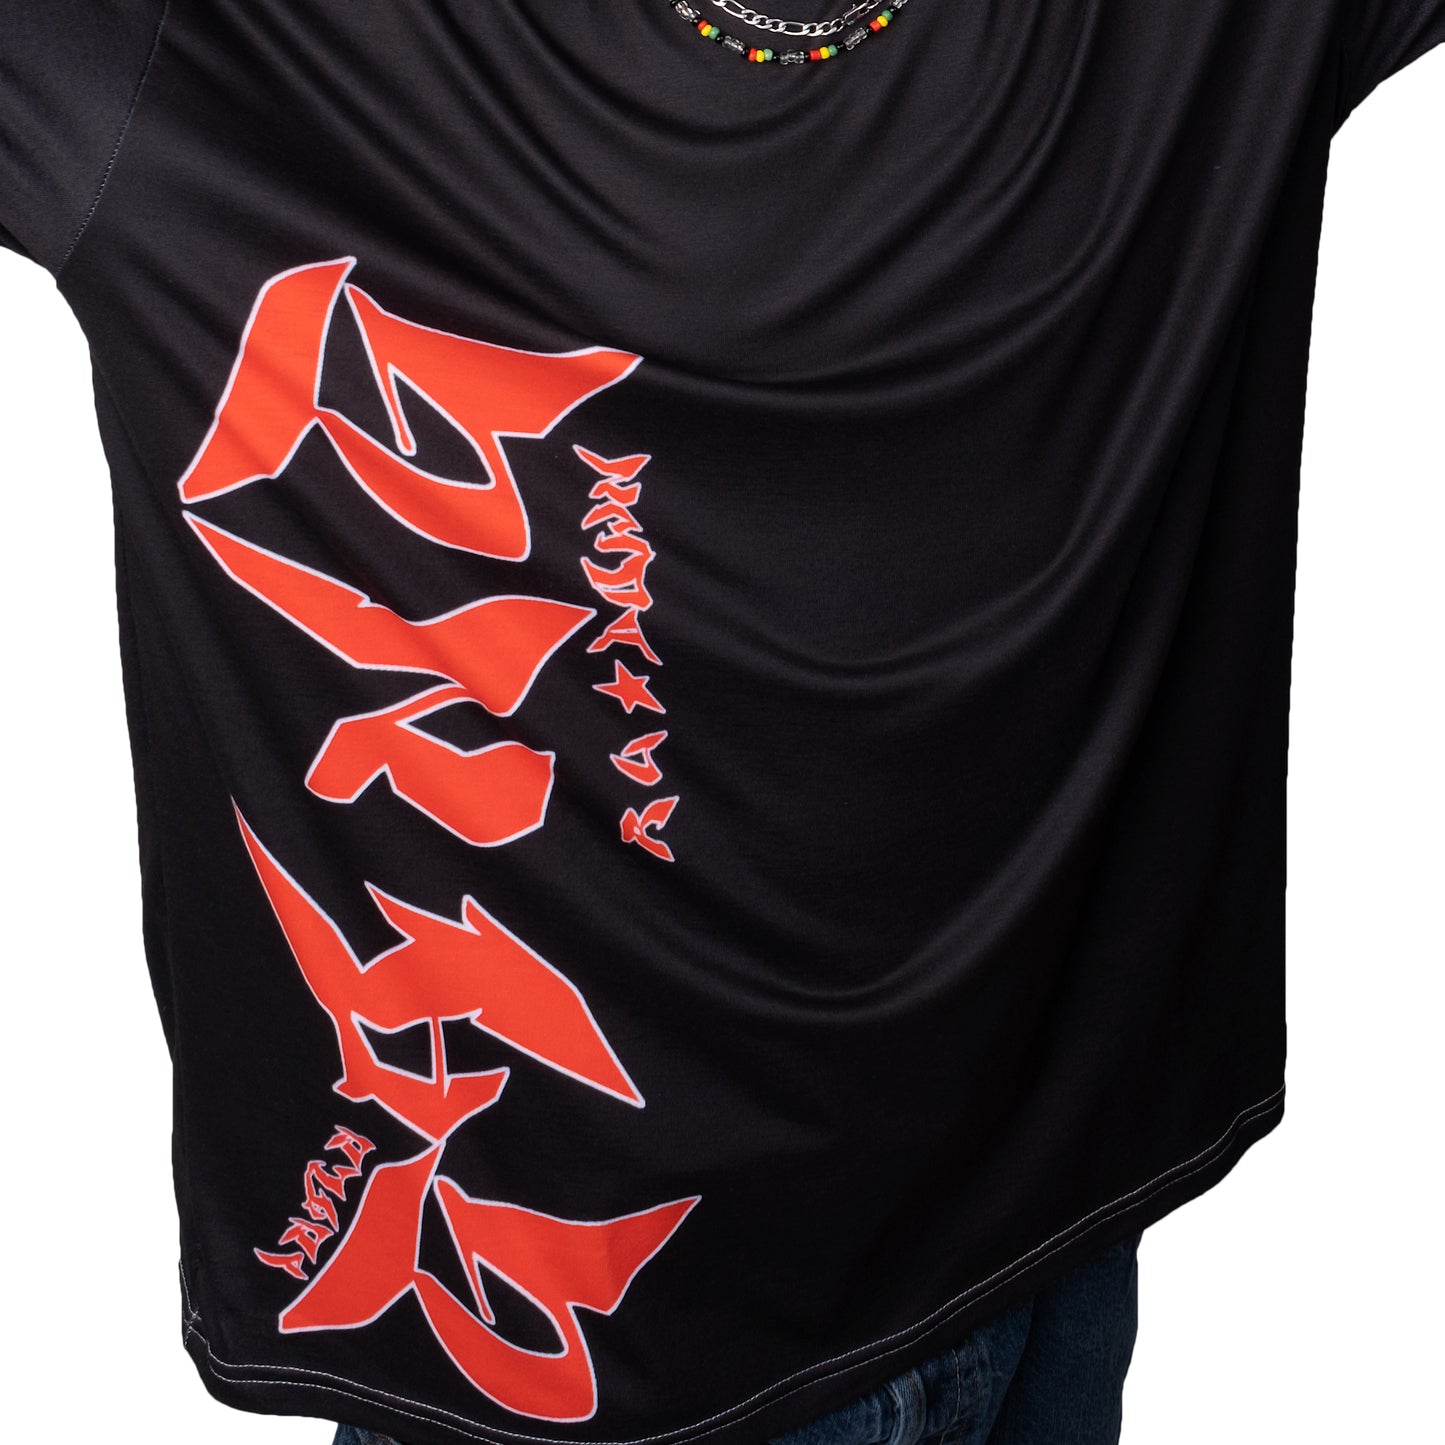 Unisex T-Shirt Black/Red PEACE GANG